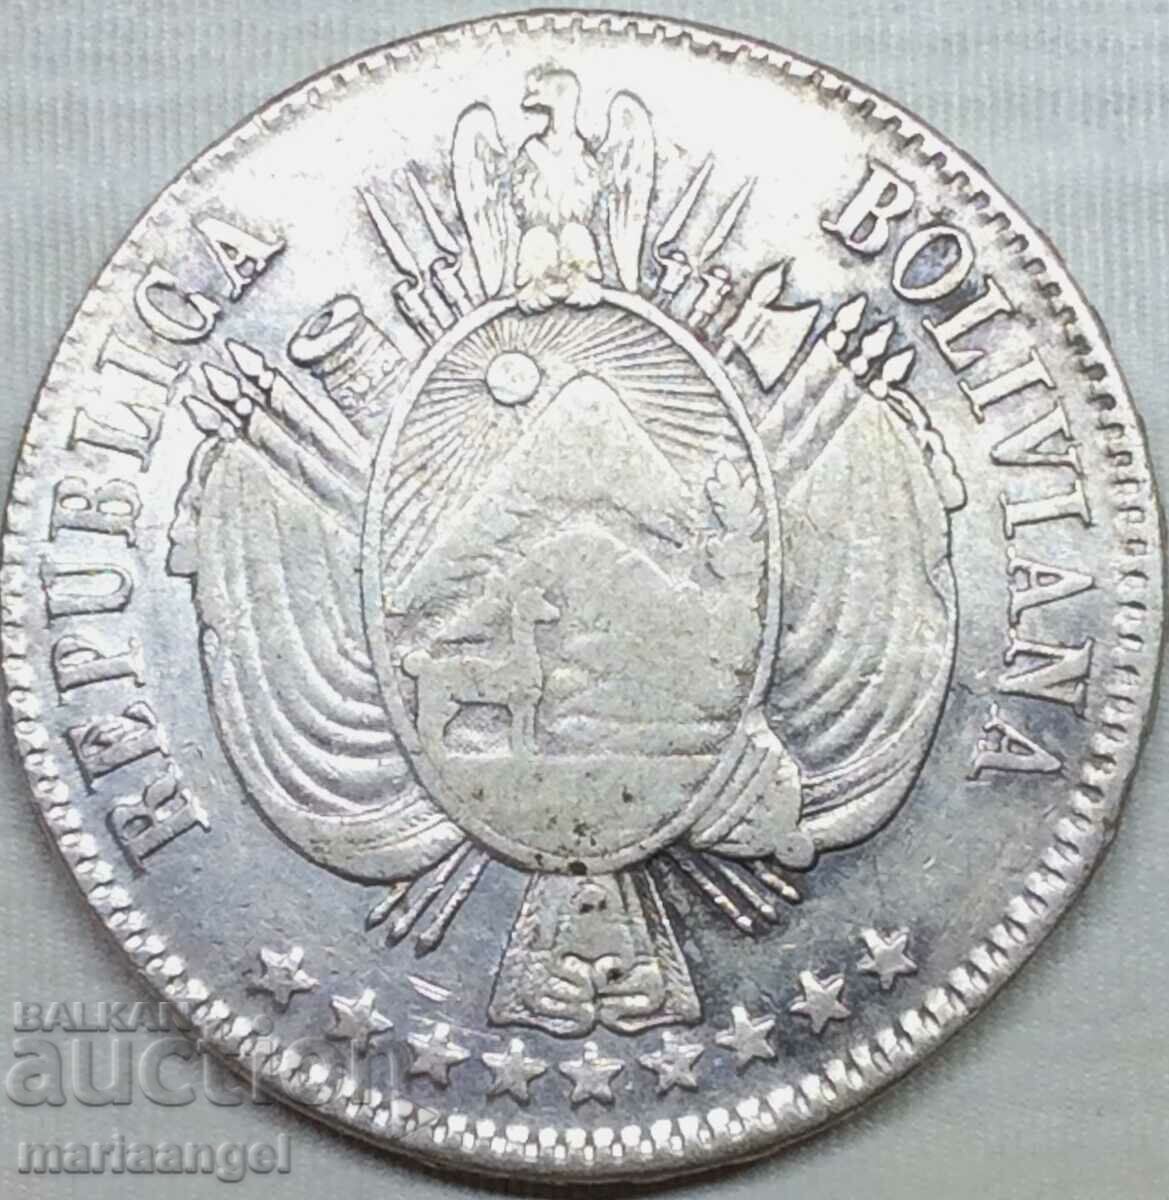 Bolivia 1865 1 boliviano 24.85g silver - extremely rare